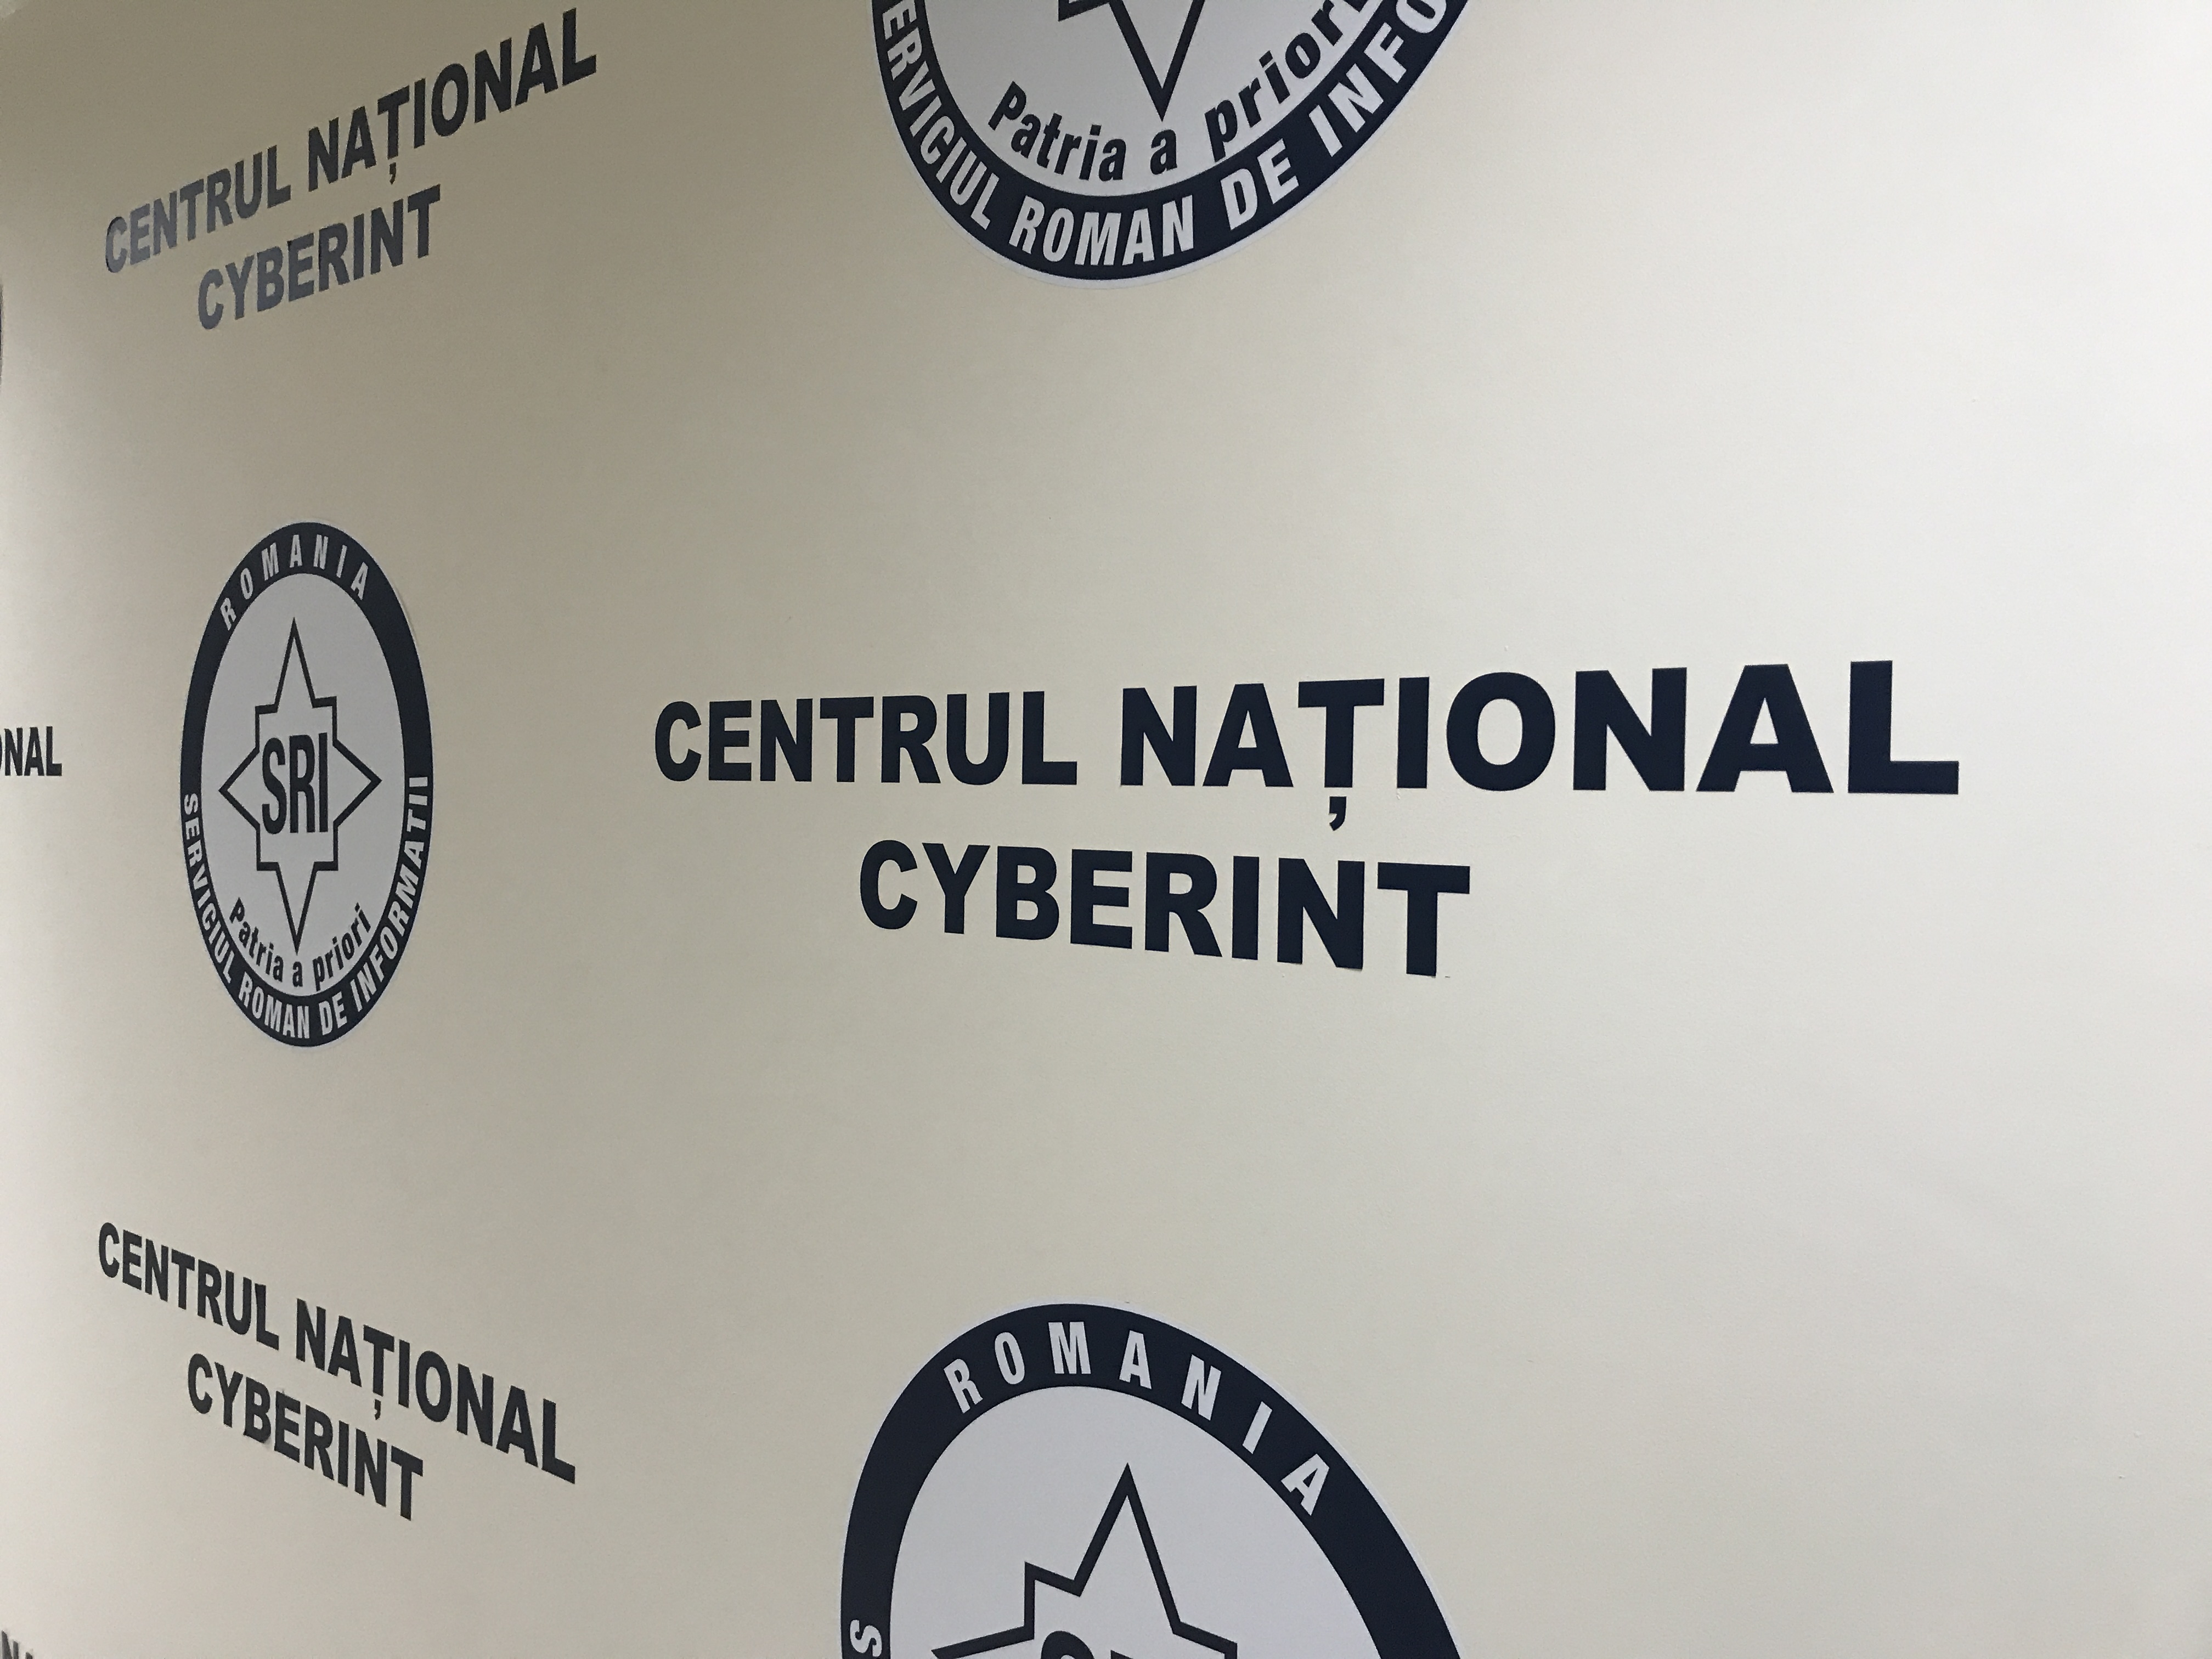 Centrul Național Cyberint